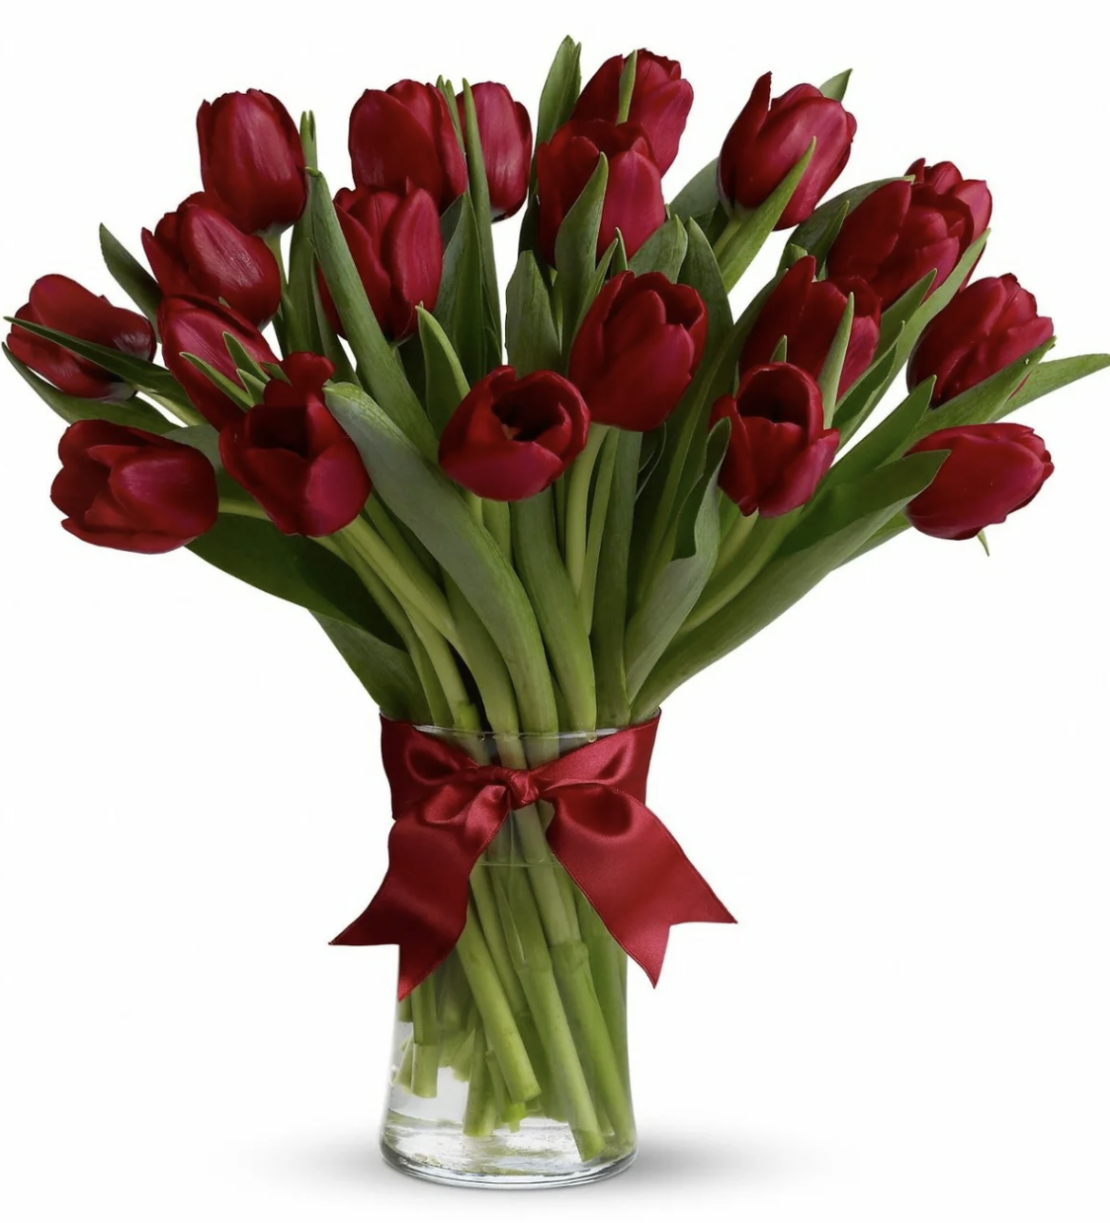 Bouquet of red tulips in vase